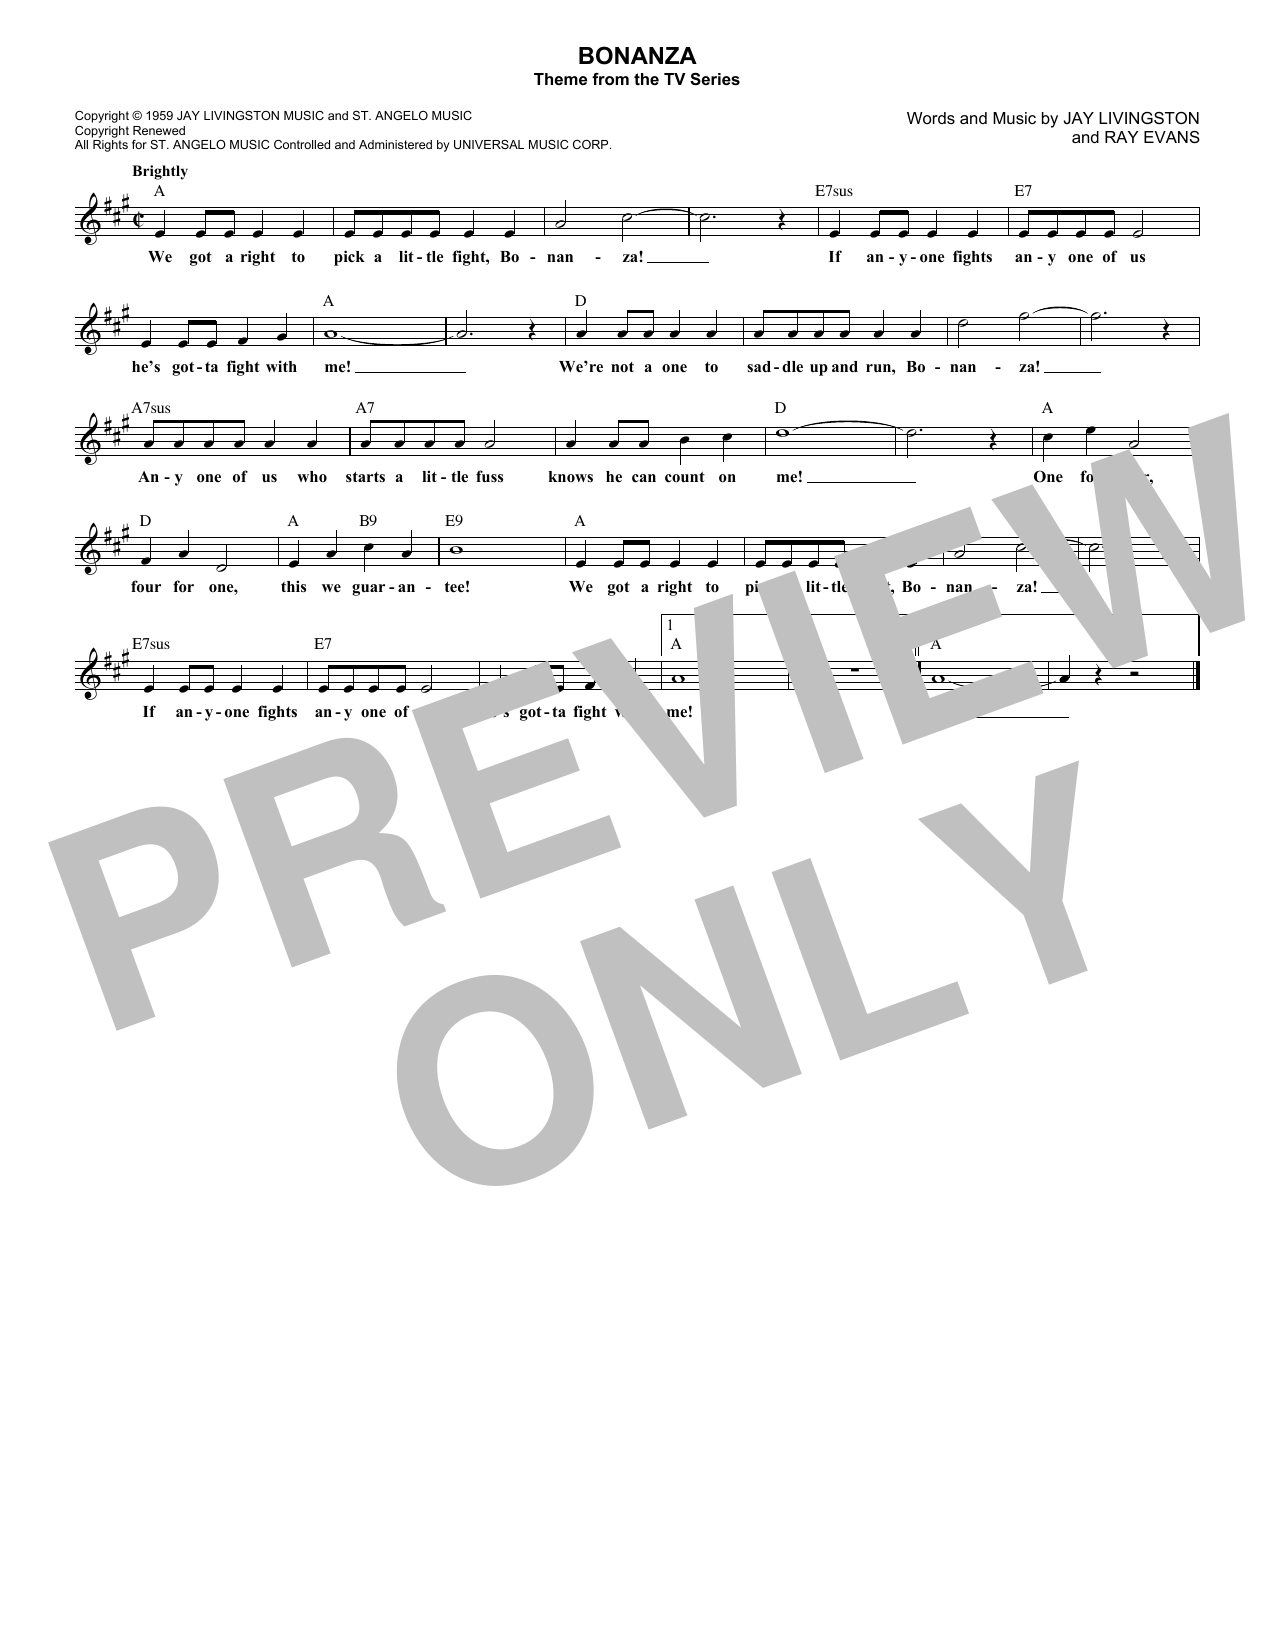 Jay Livingston Bonanza Sheet Music Notes & Chords for Lead Sheet / Fake Book - Download or Print PDF